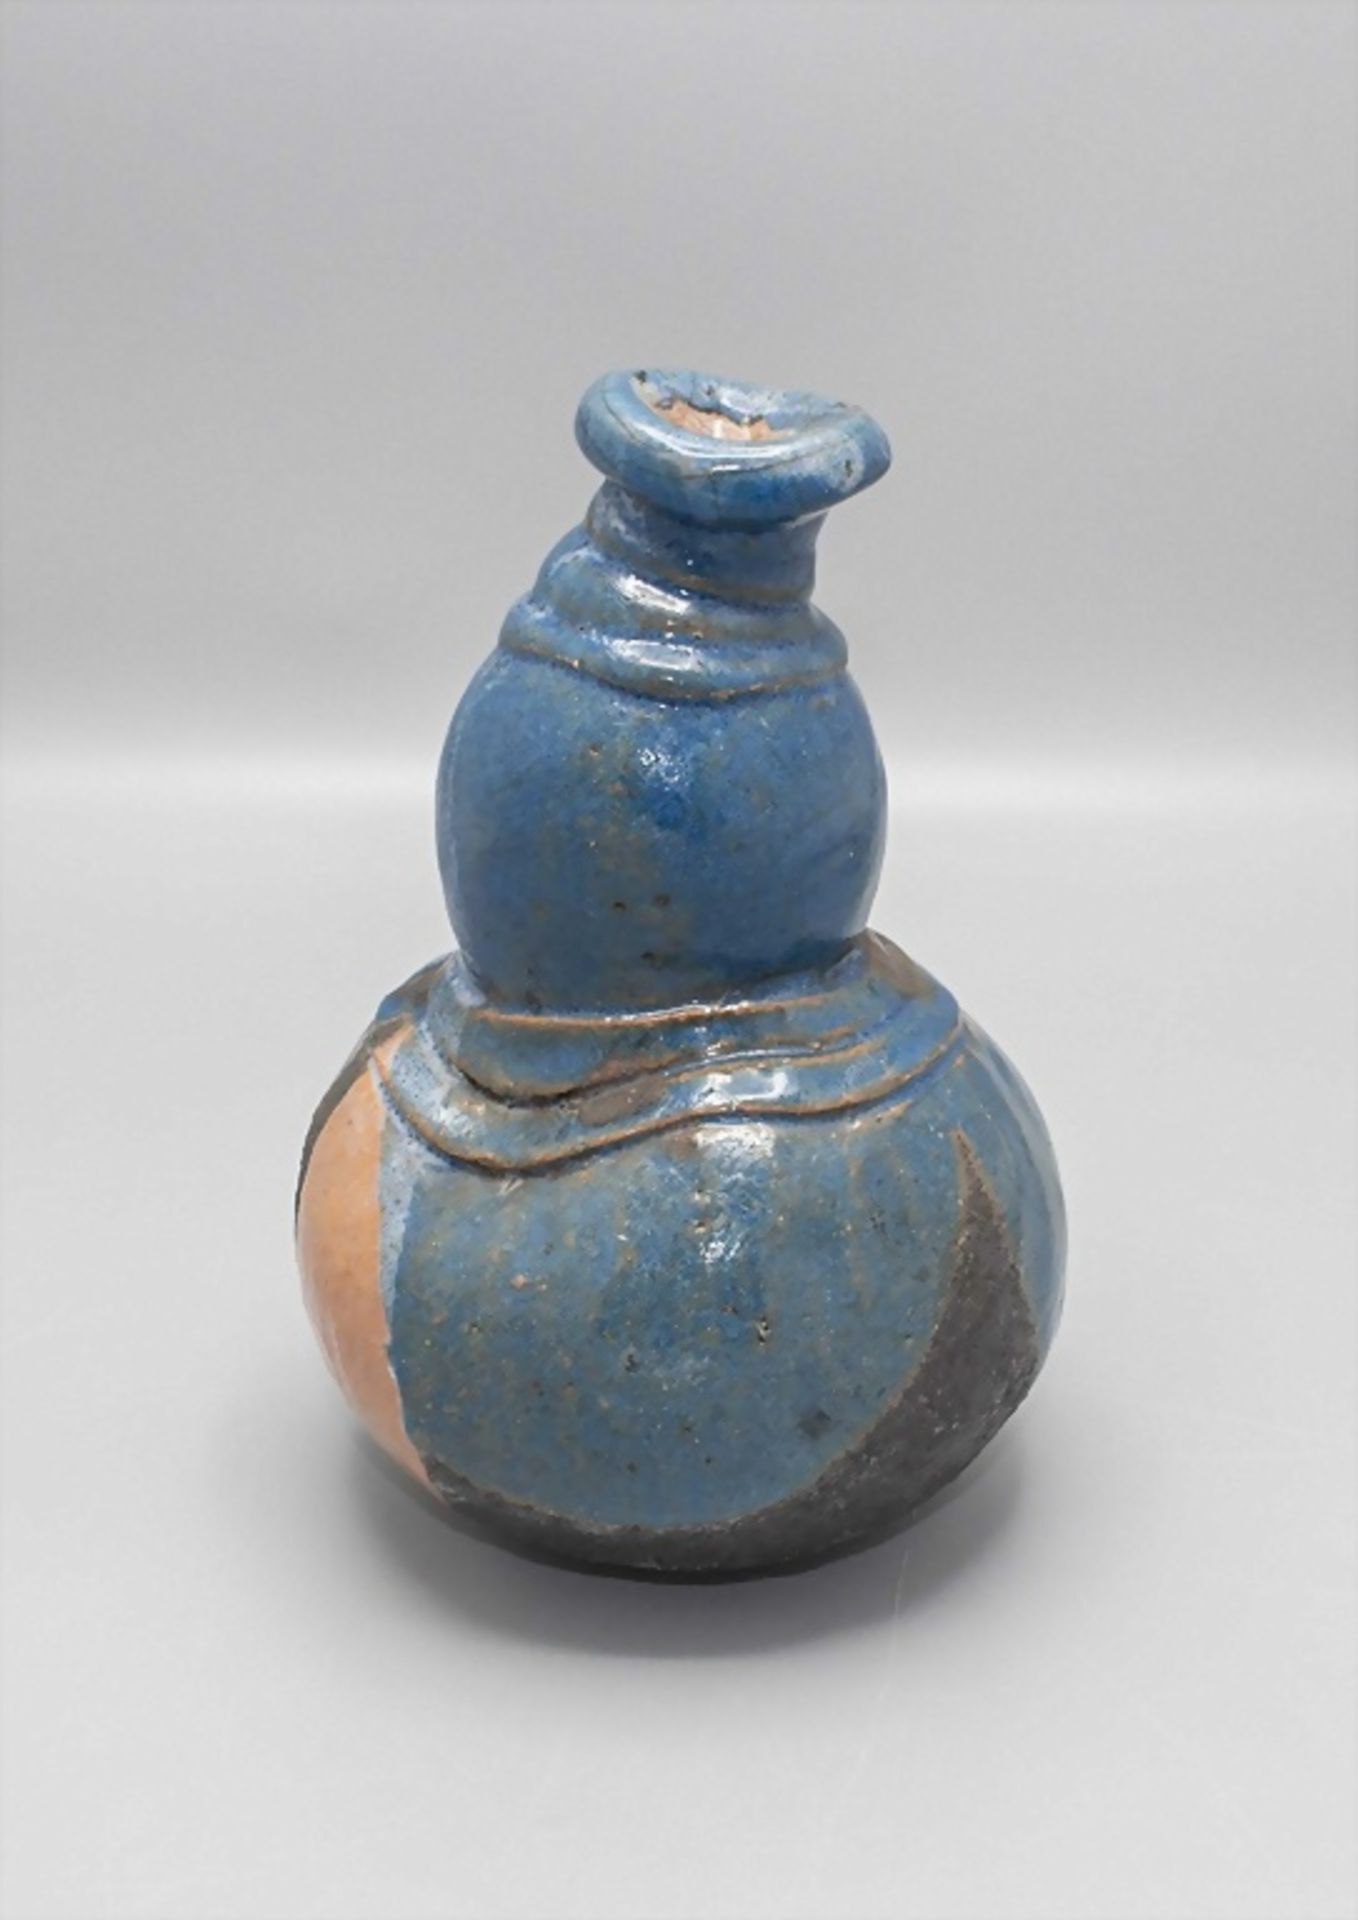 Vase Studiokeramik / A studio ceramic vase, 20. Jh. - Image 2 of 6